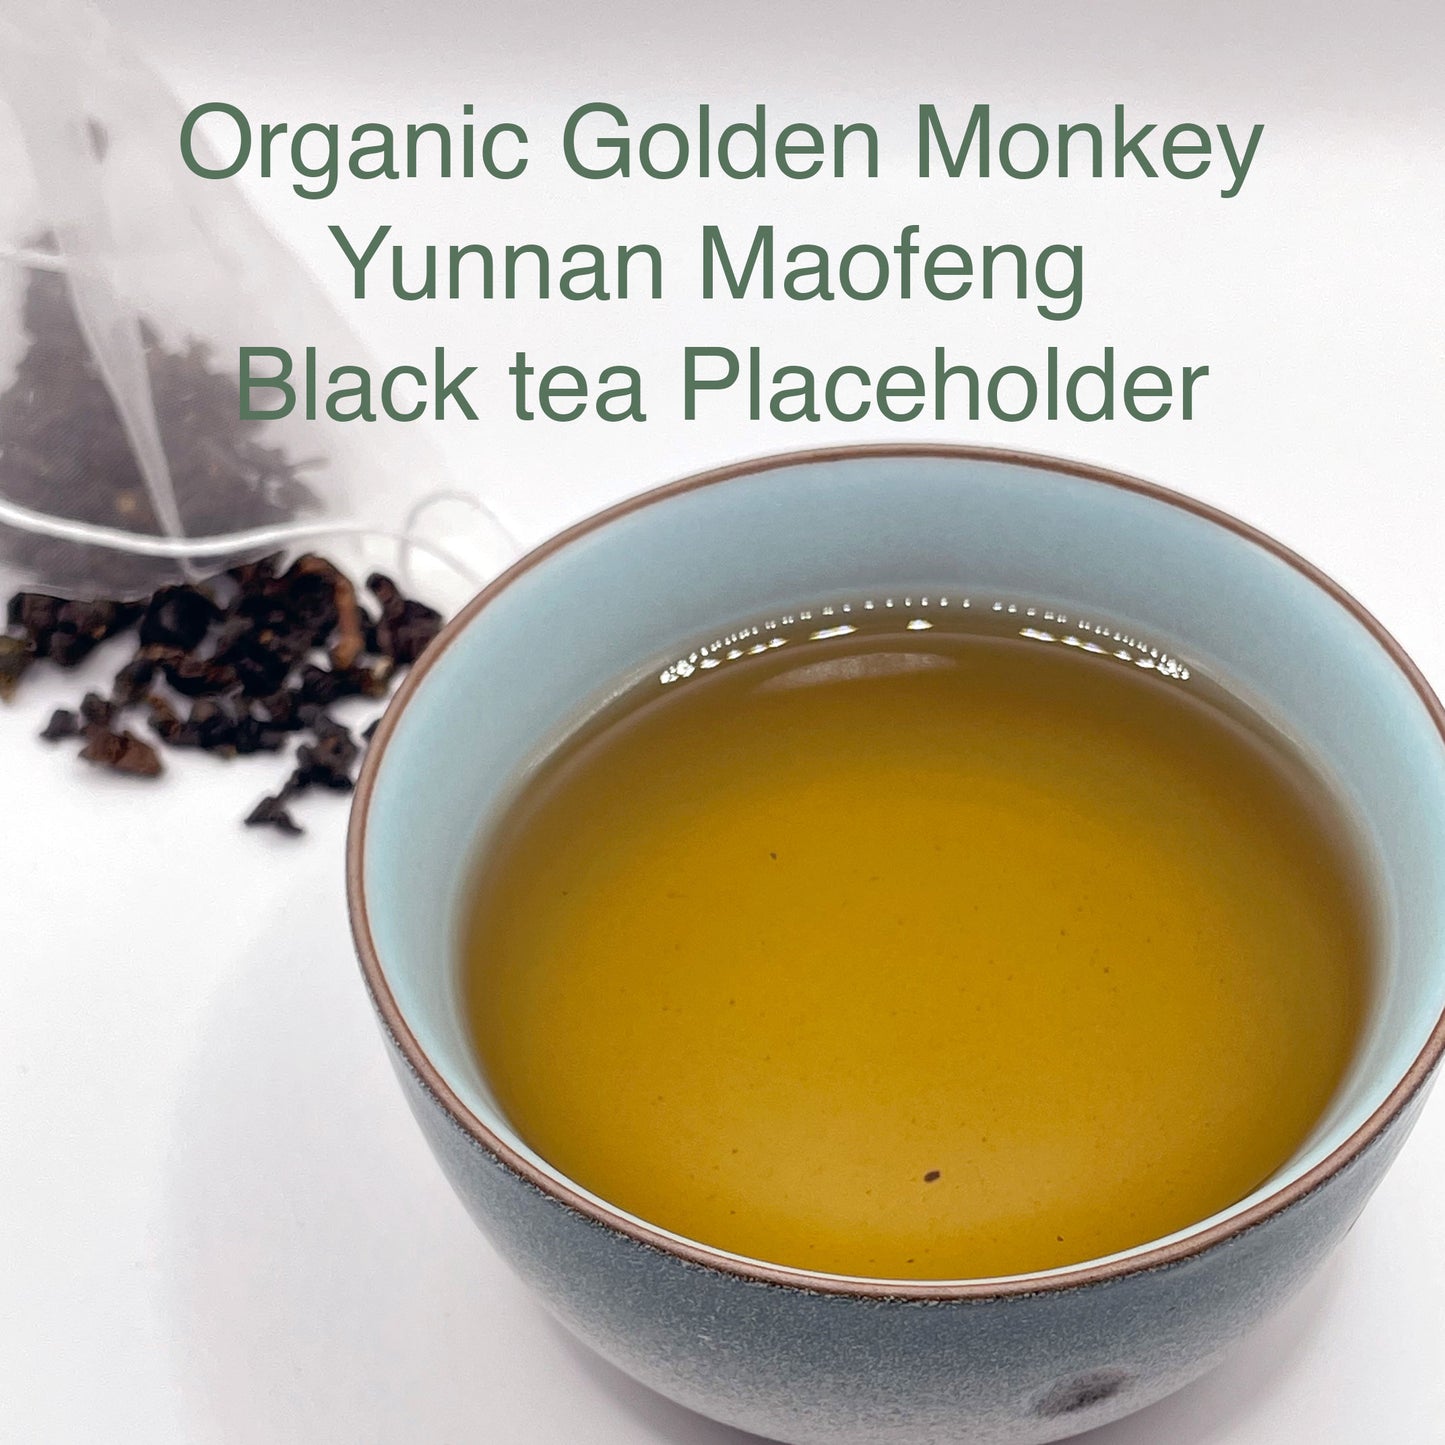 Organic Golden Monkey Yunnan Maofeng Black tea